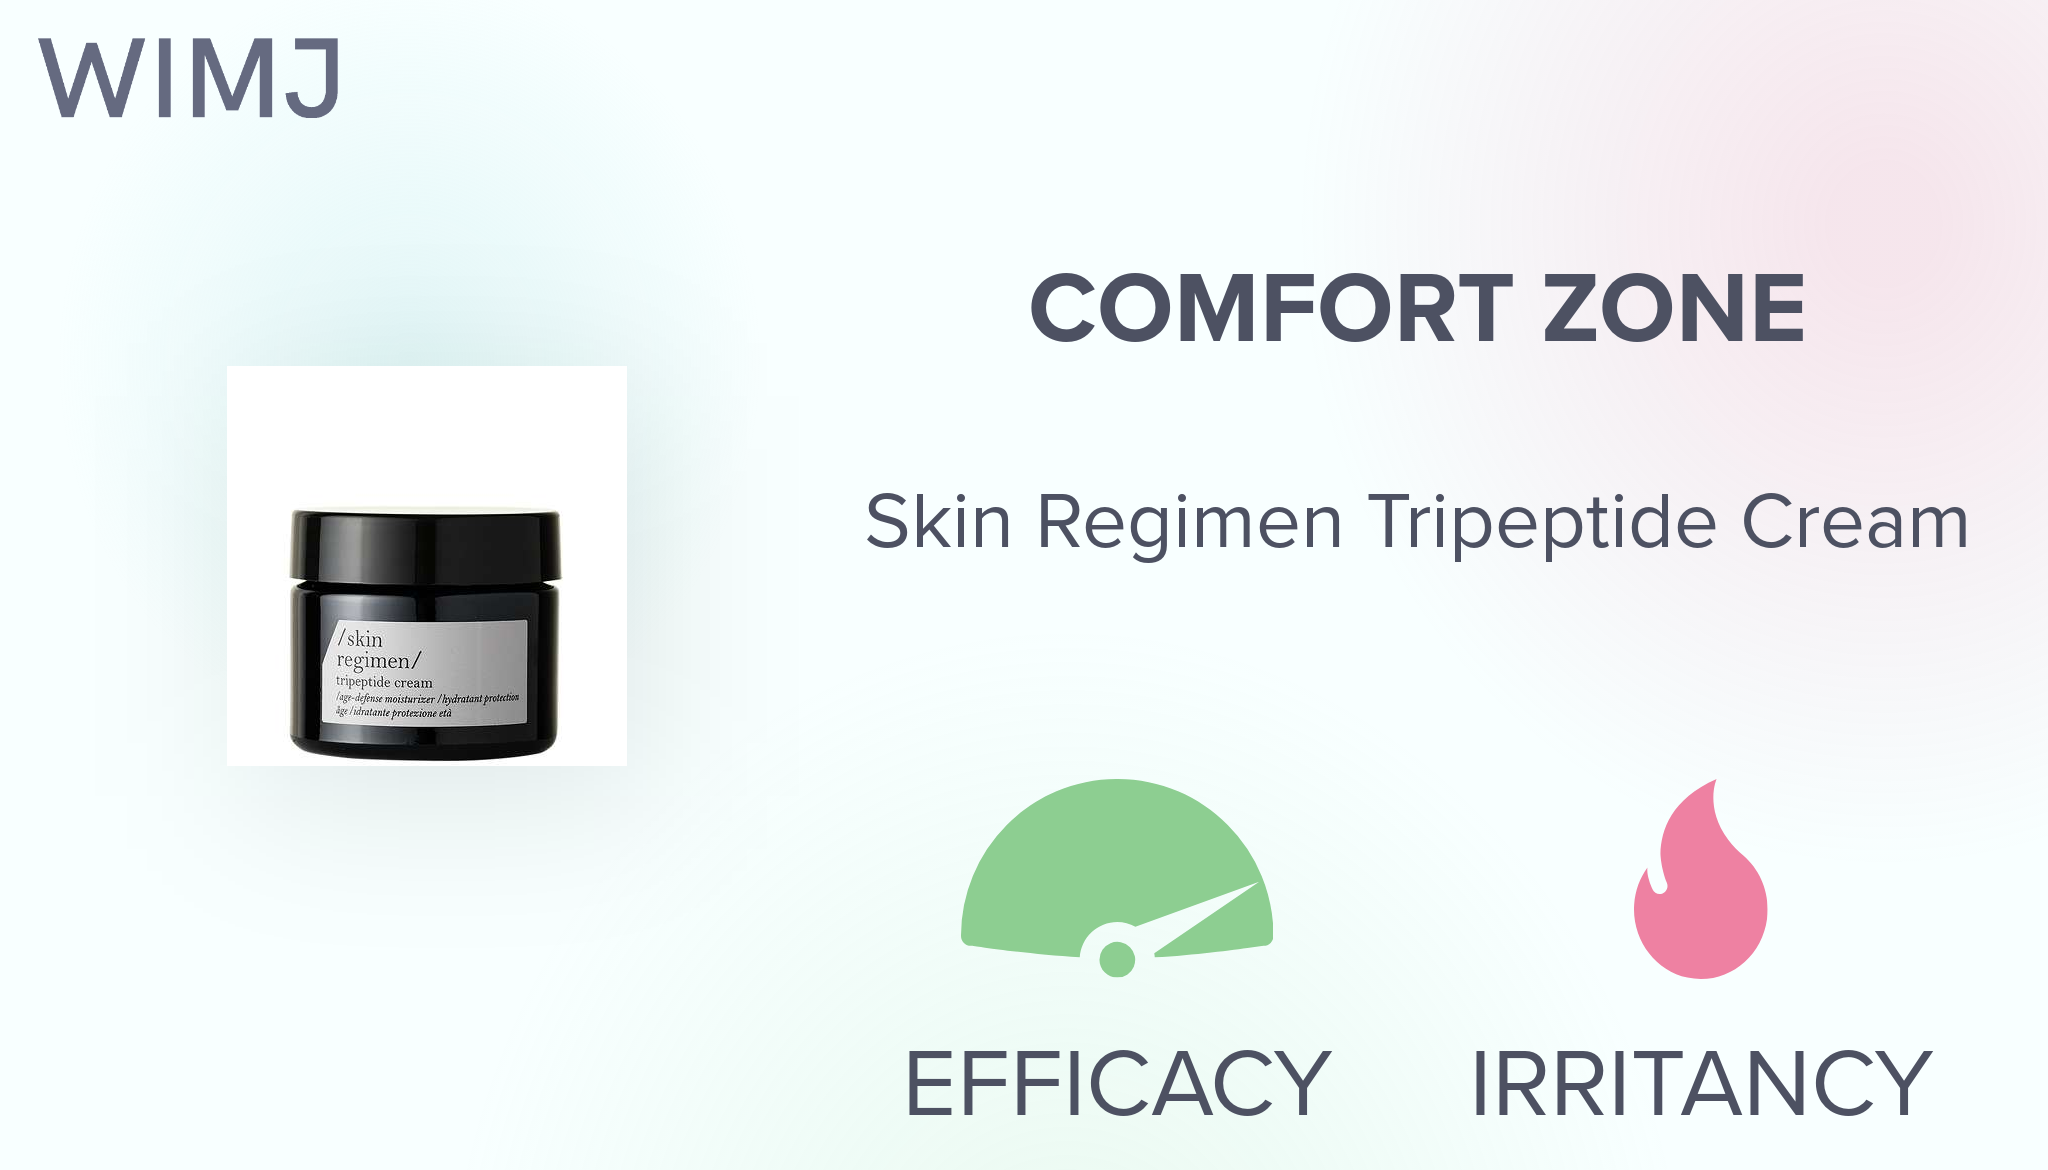 Review: Comfort Zone - Skin Regimen Tripeptide Cream - WIMJ